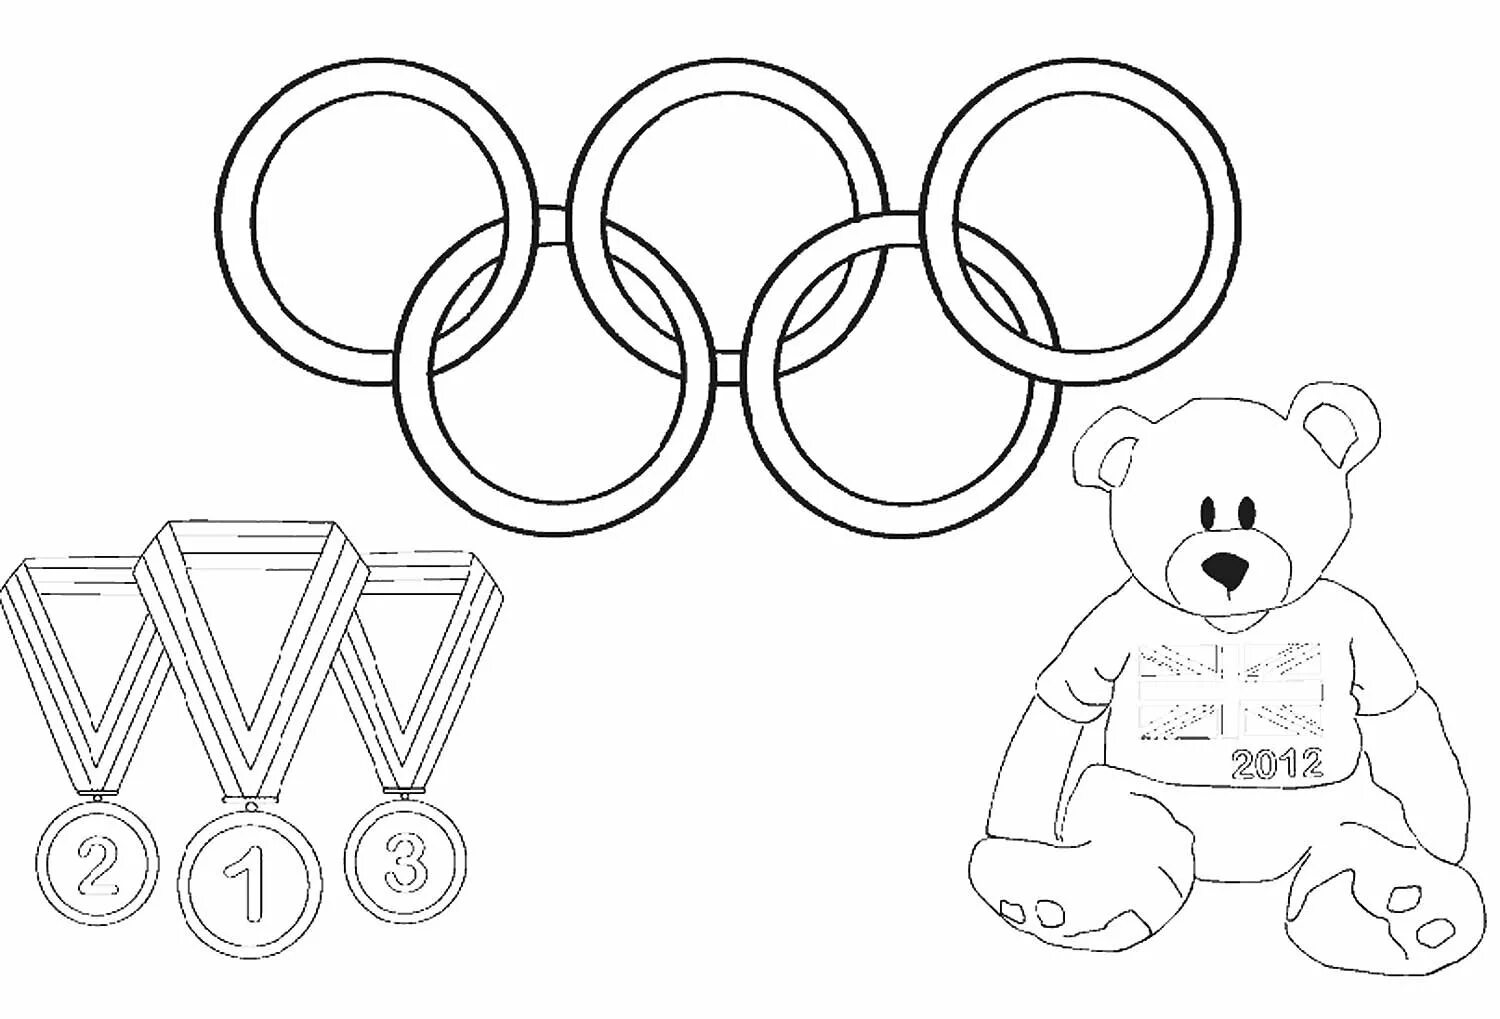 Раскраска на тему Олимпийские игры. Олимпийские игры рисунок. Раскраска Олимпийские игры для детей. Олимпийские кольца раскраска. Олимпийские игры рисунок легко